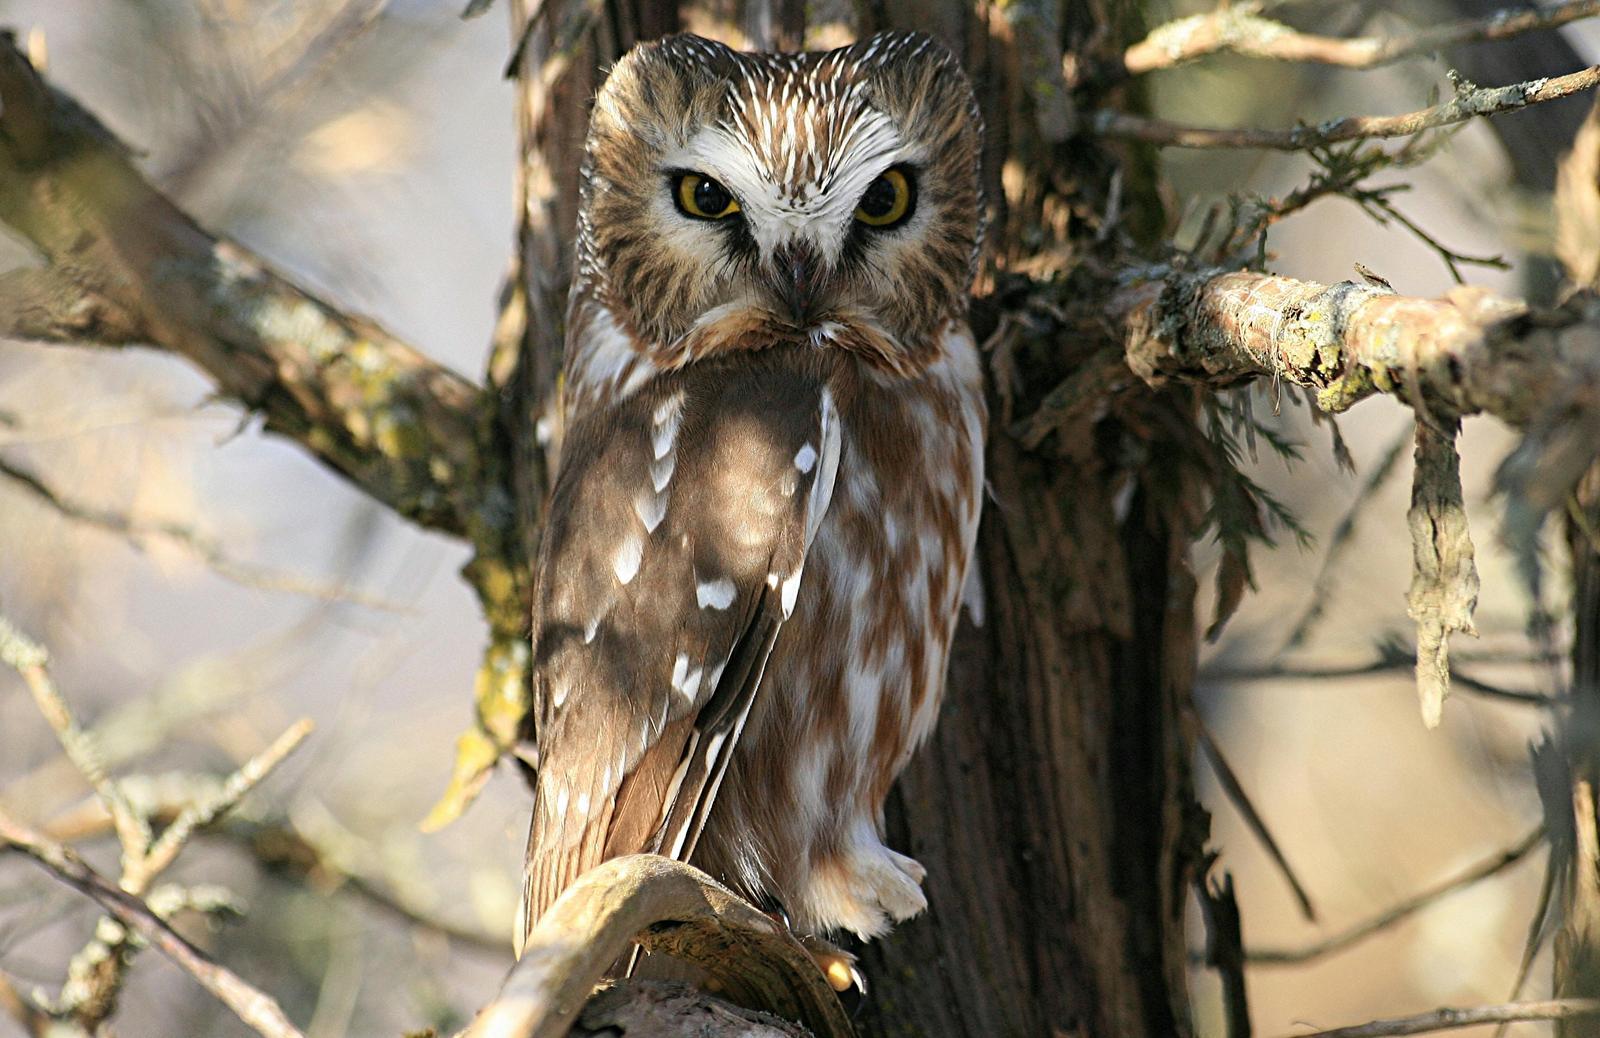 Northern Saw-whet Owl Photo by Aaron Hywarren